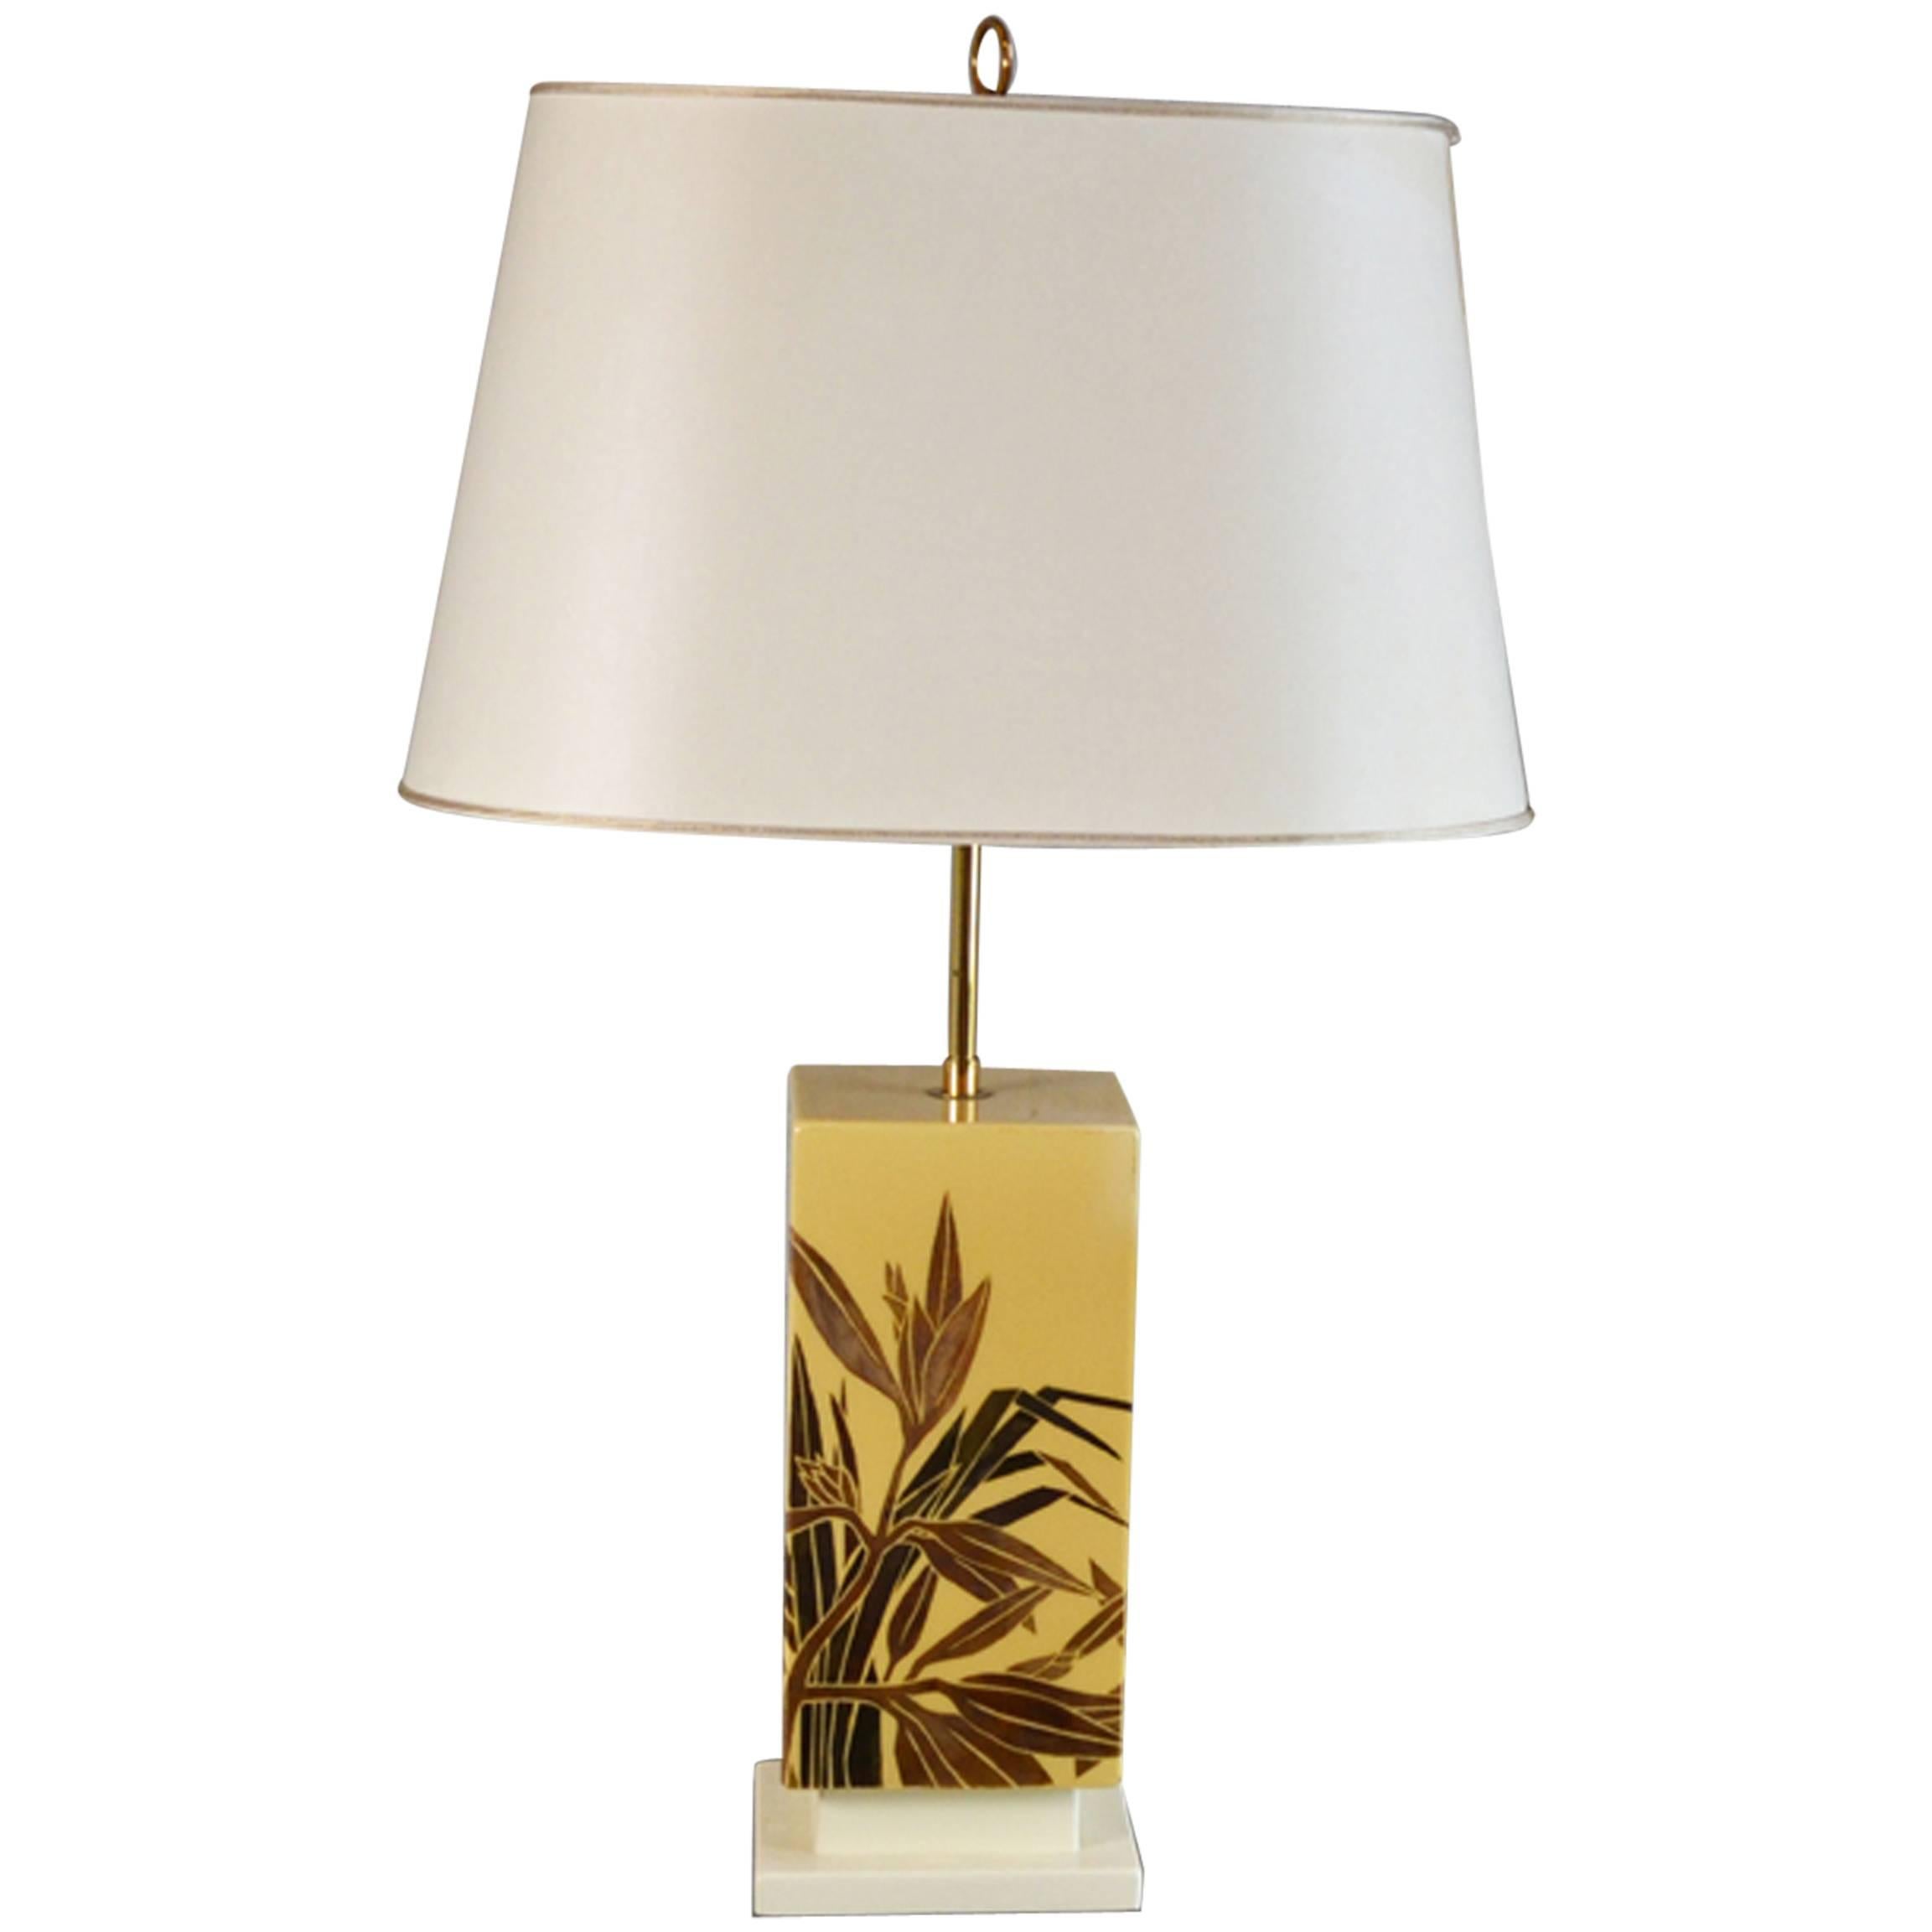 1960s Palm Leaf Ceramic Lamp For Sale